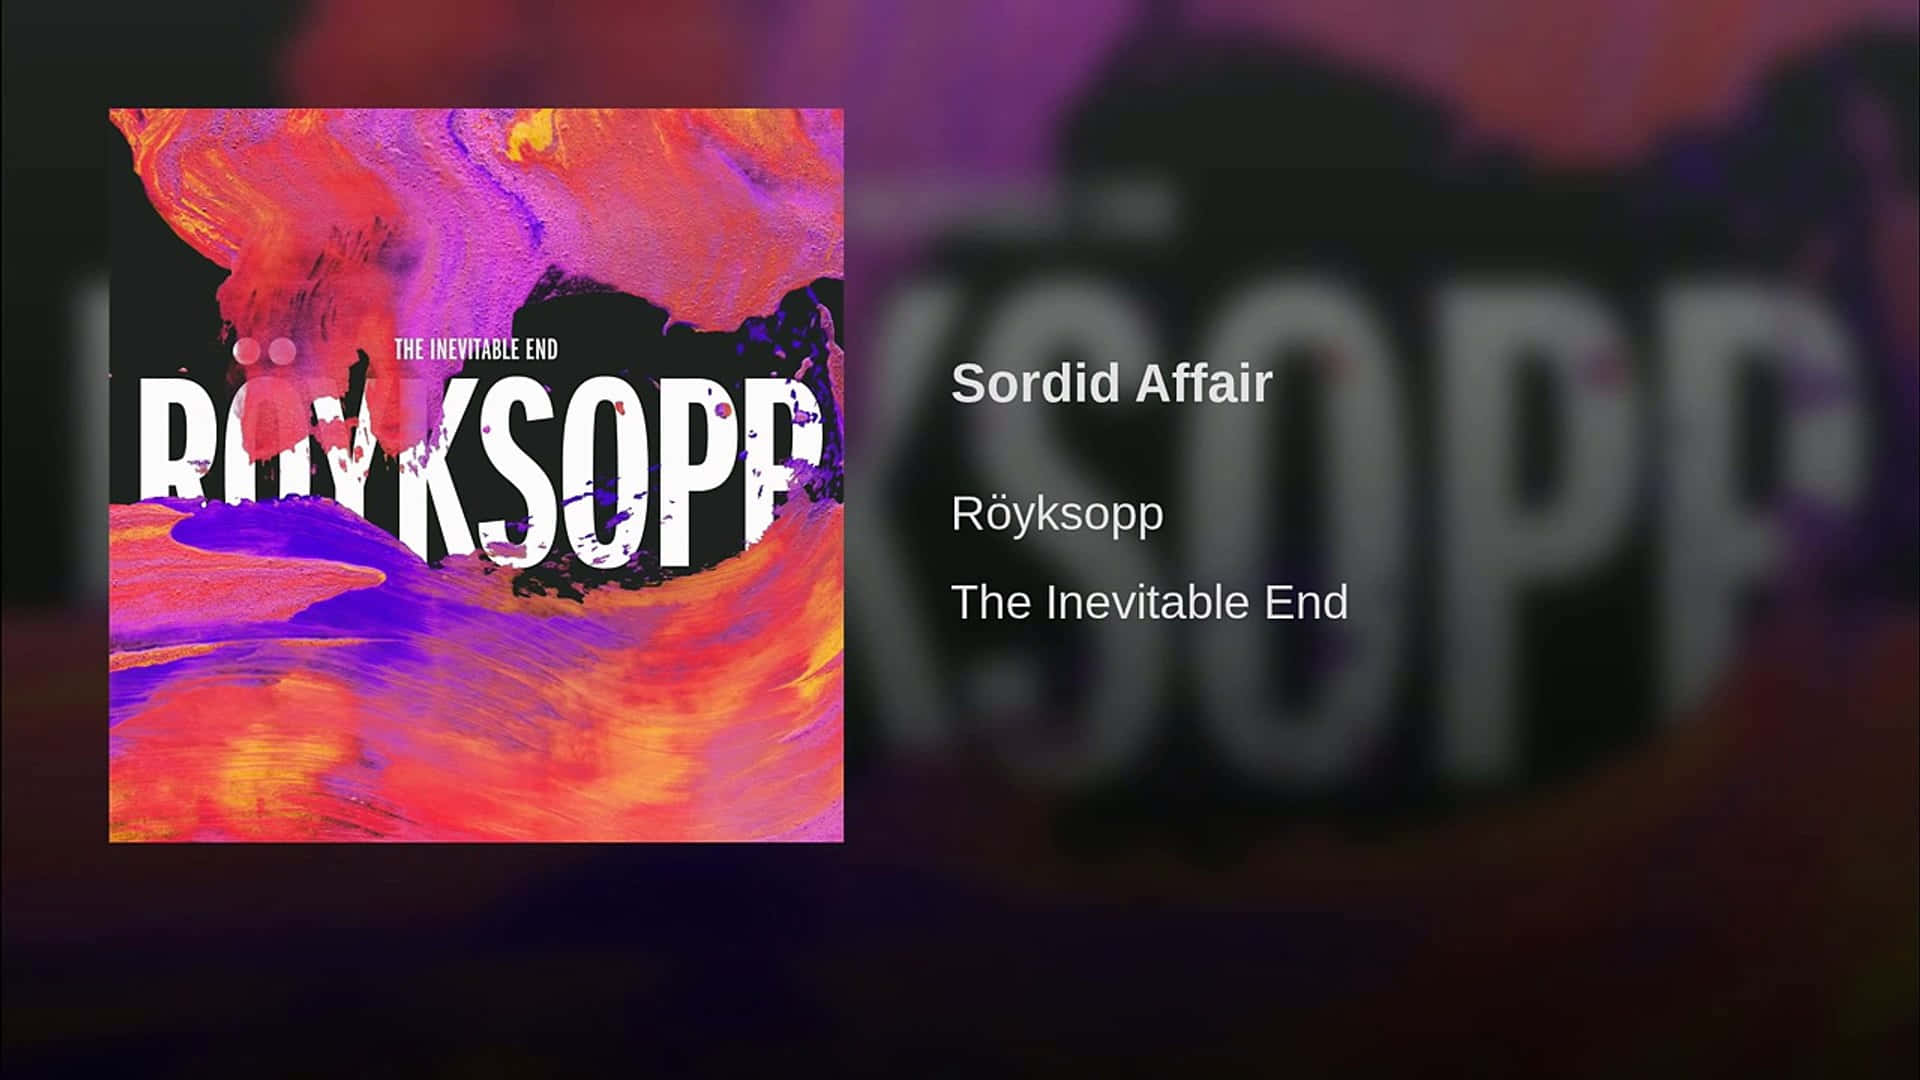 She comes again на звонок. The inevitable end Röyksopp. Карта inevitable end. Royksopp here she comes again исполнитель. Röyksopp - sordid Affair.